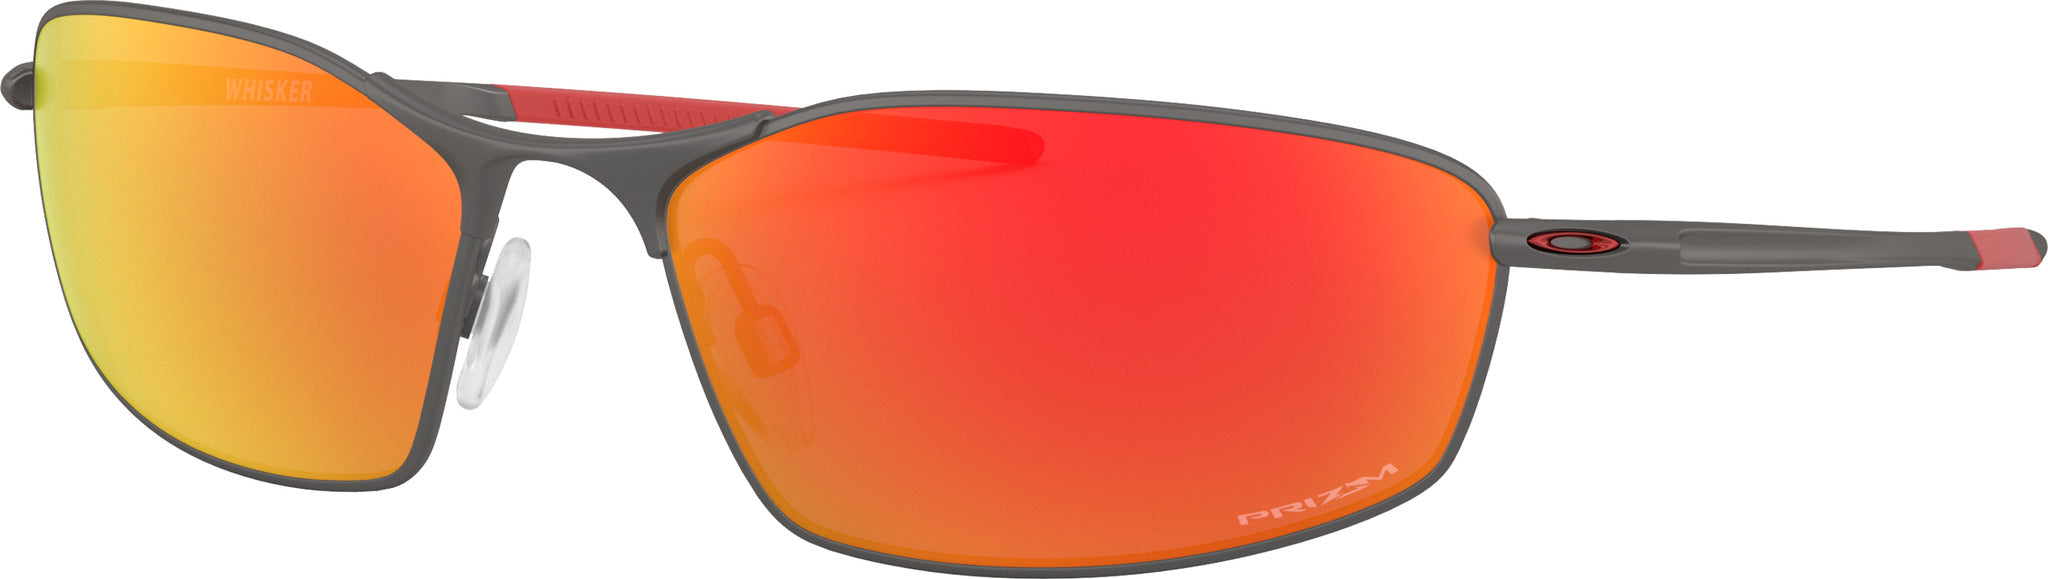 Oakley Whisker Sunglasses - Matte Gunmetal - Prizm Ruby Iridium Lens |  Altitude Sports